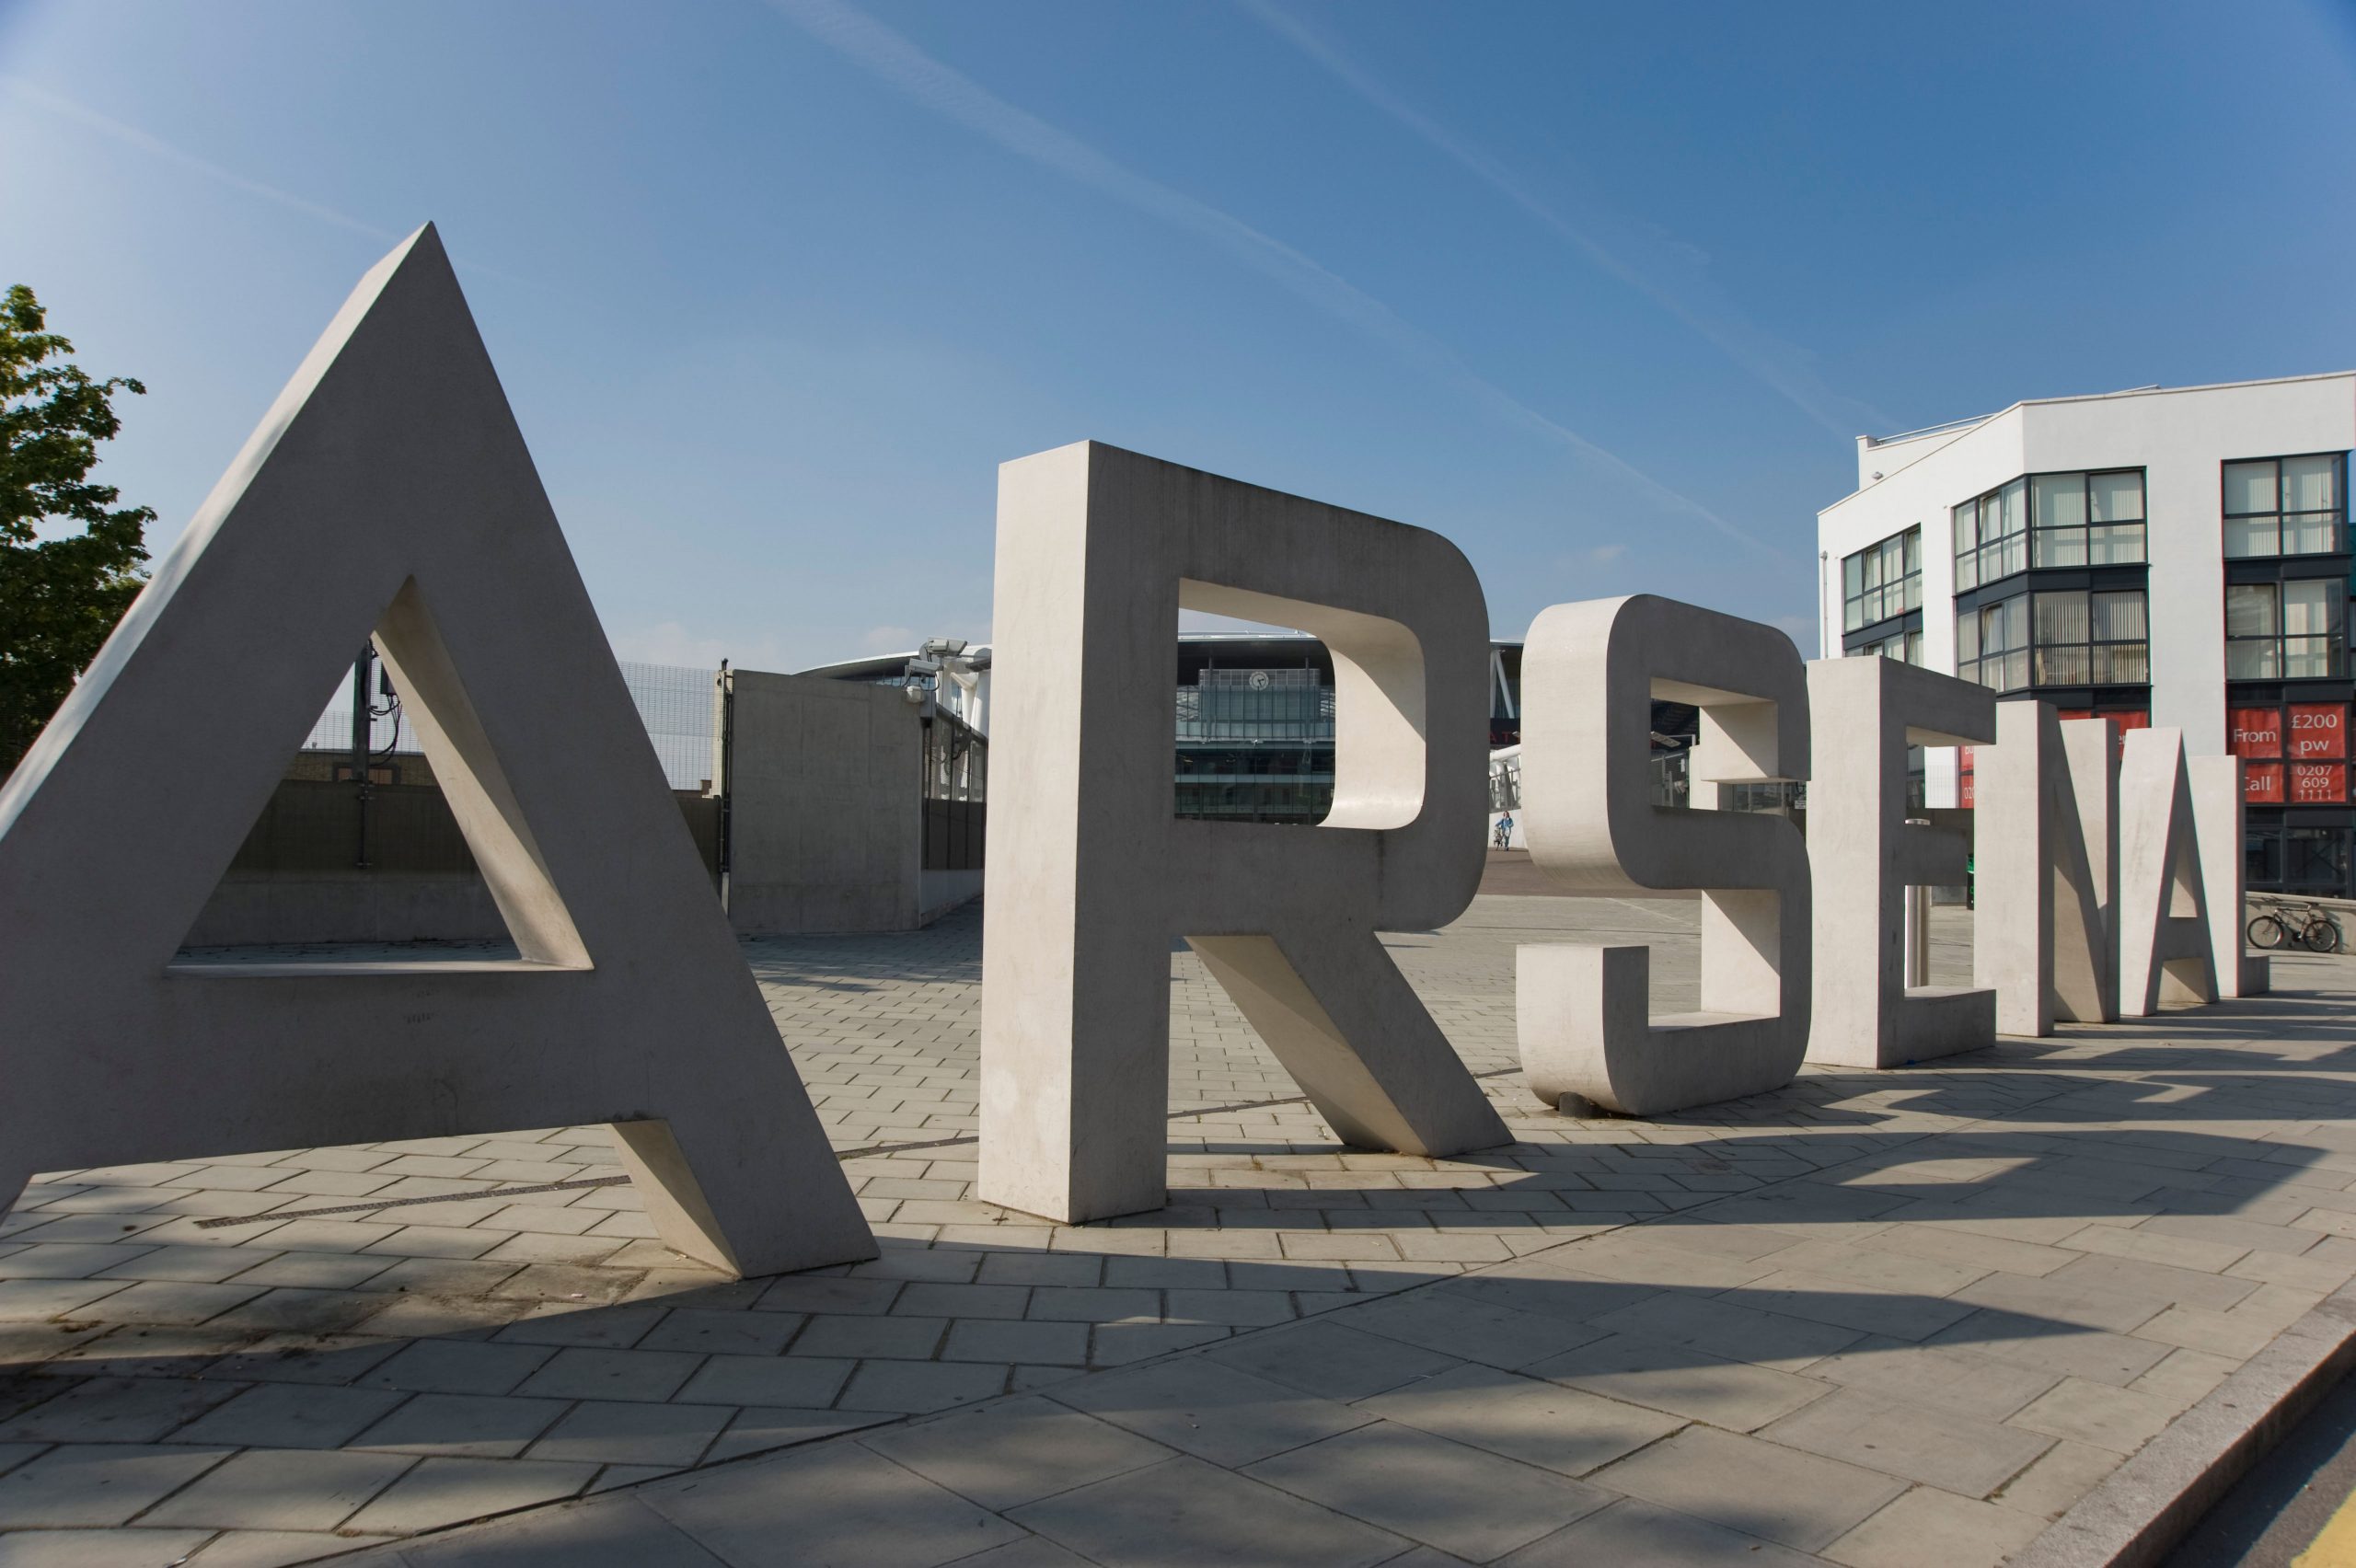 The large concrete letters spell 'Arsenal' outside the Arsenal Emirates stadium London UK